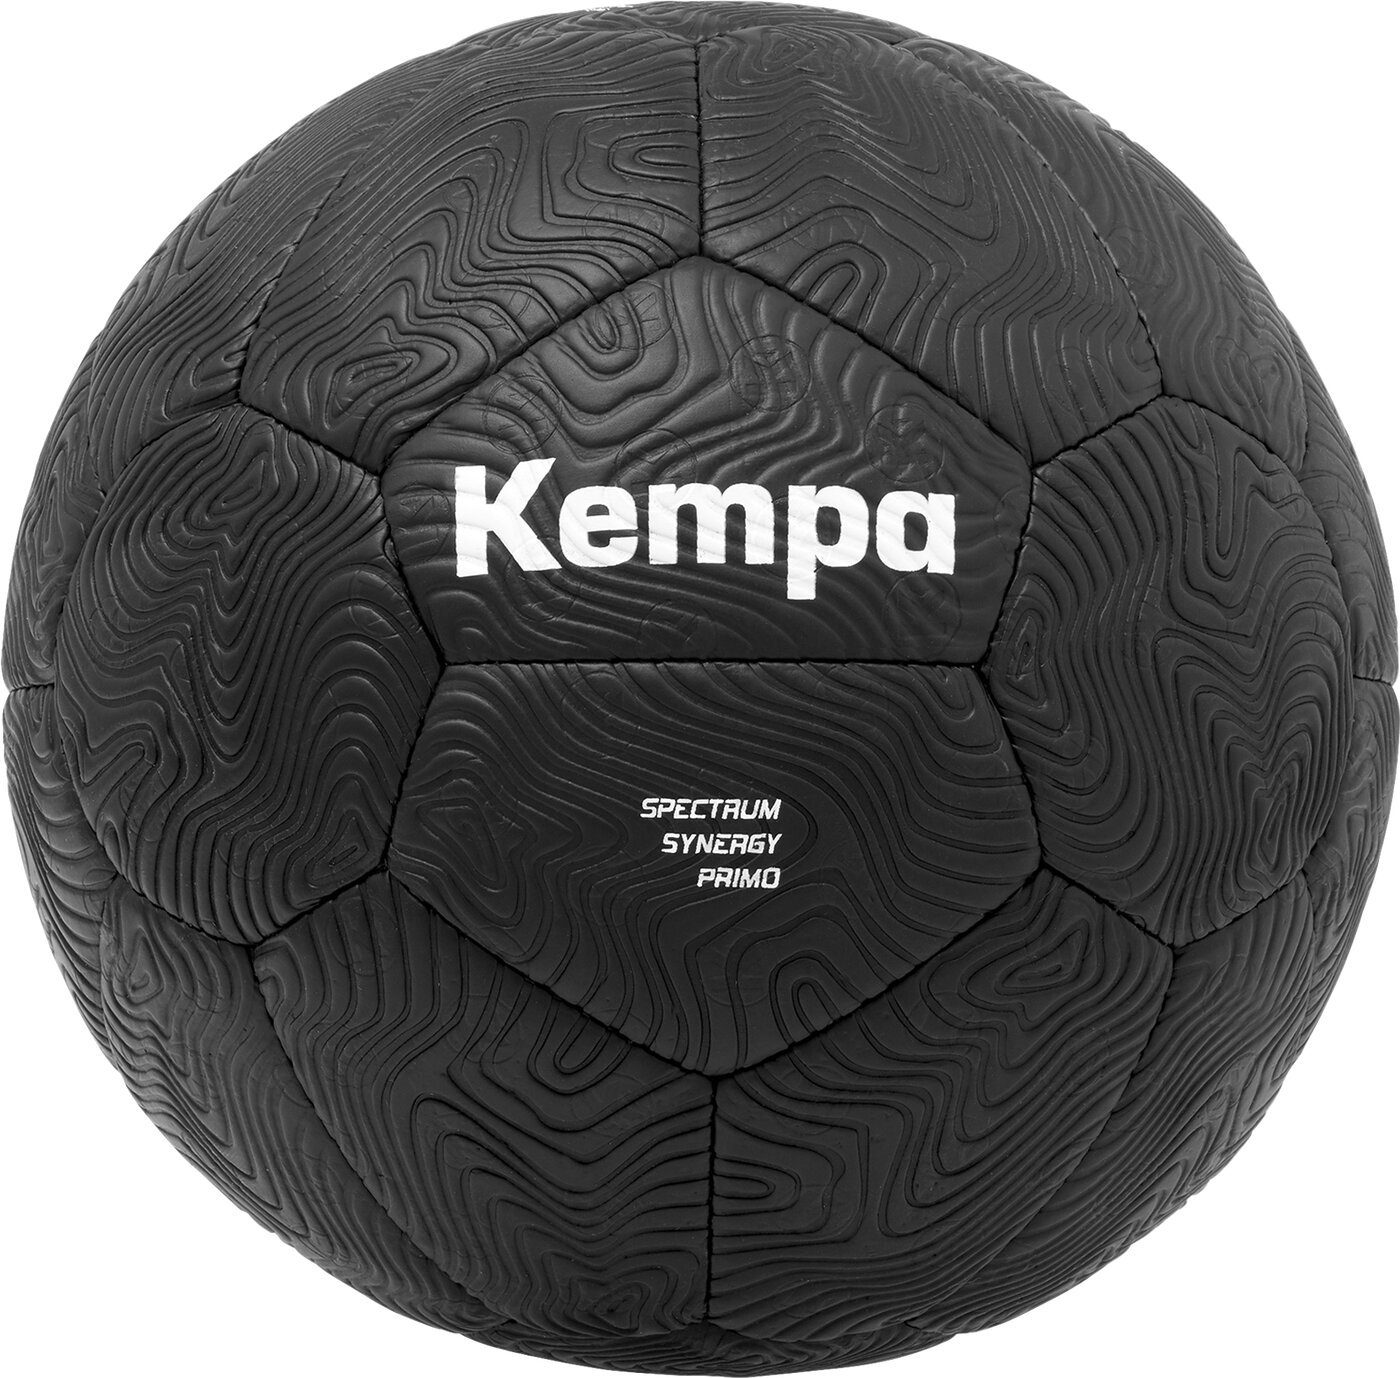 Handball SYNERGY PRIMO SPECTRUM Kempa SCHWARZ